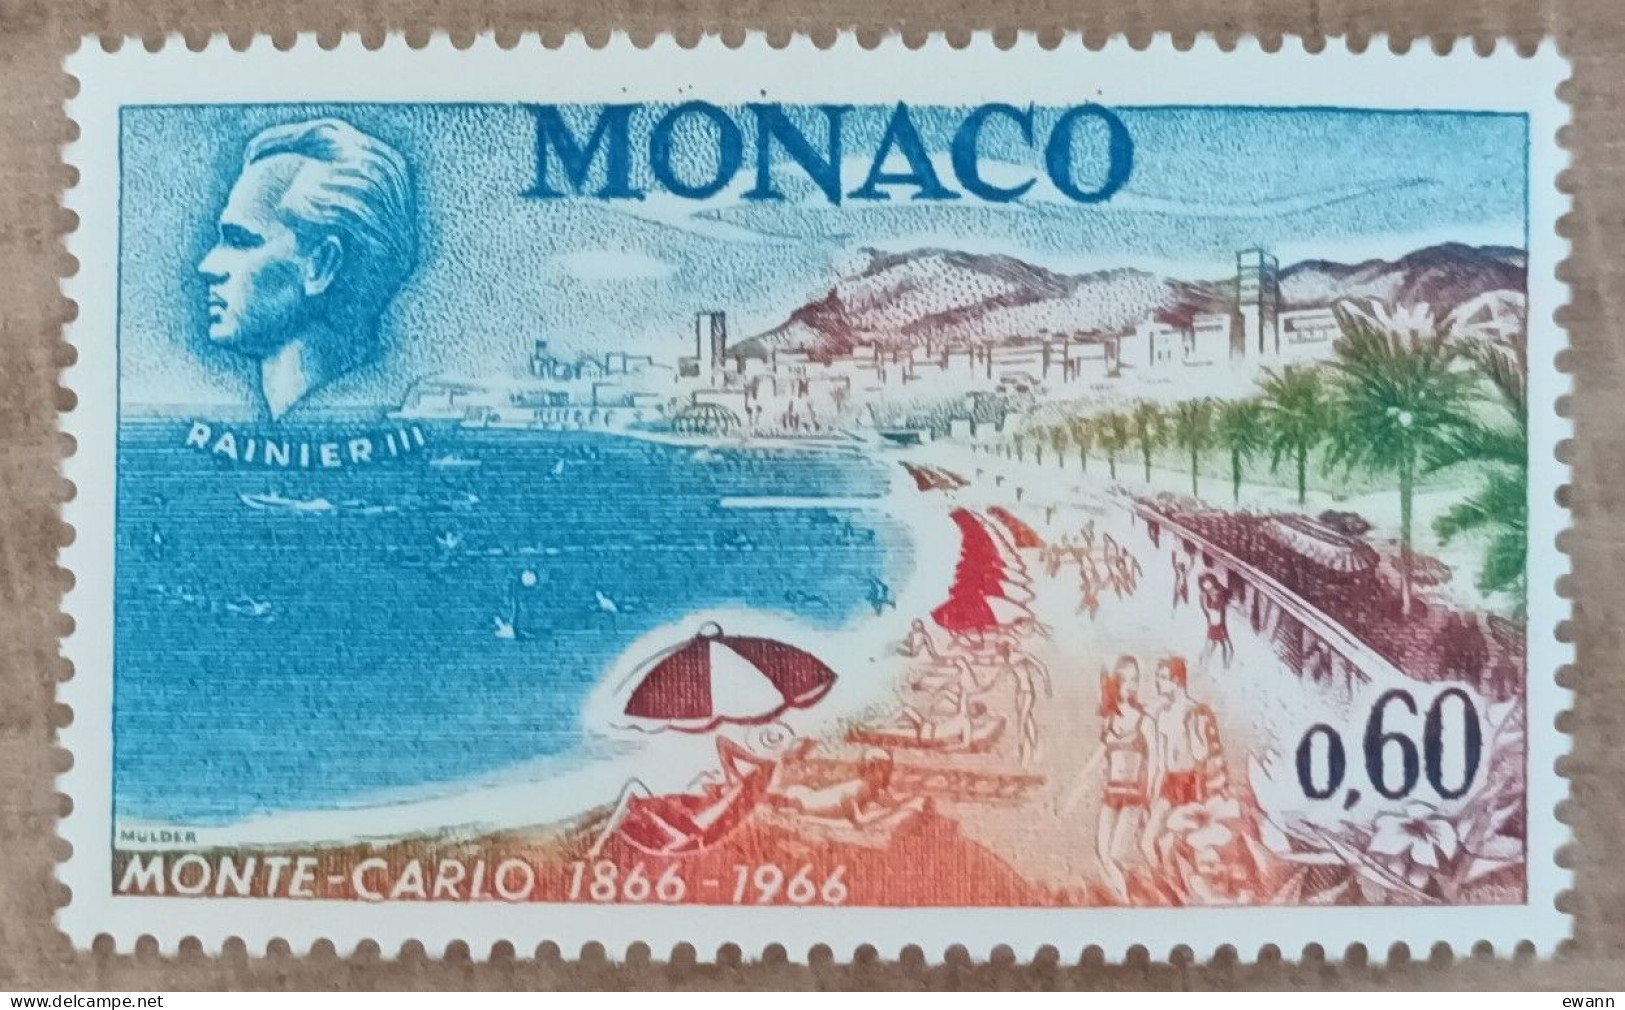 Monaco - YT N°694 - Centenaire De Monte Carlo - 1966 - Neuf - Ongebruikt